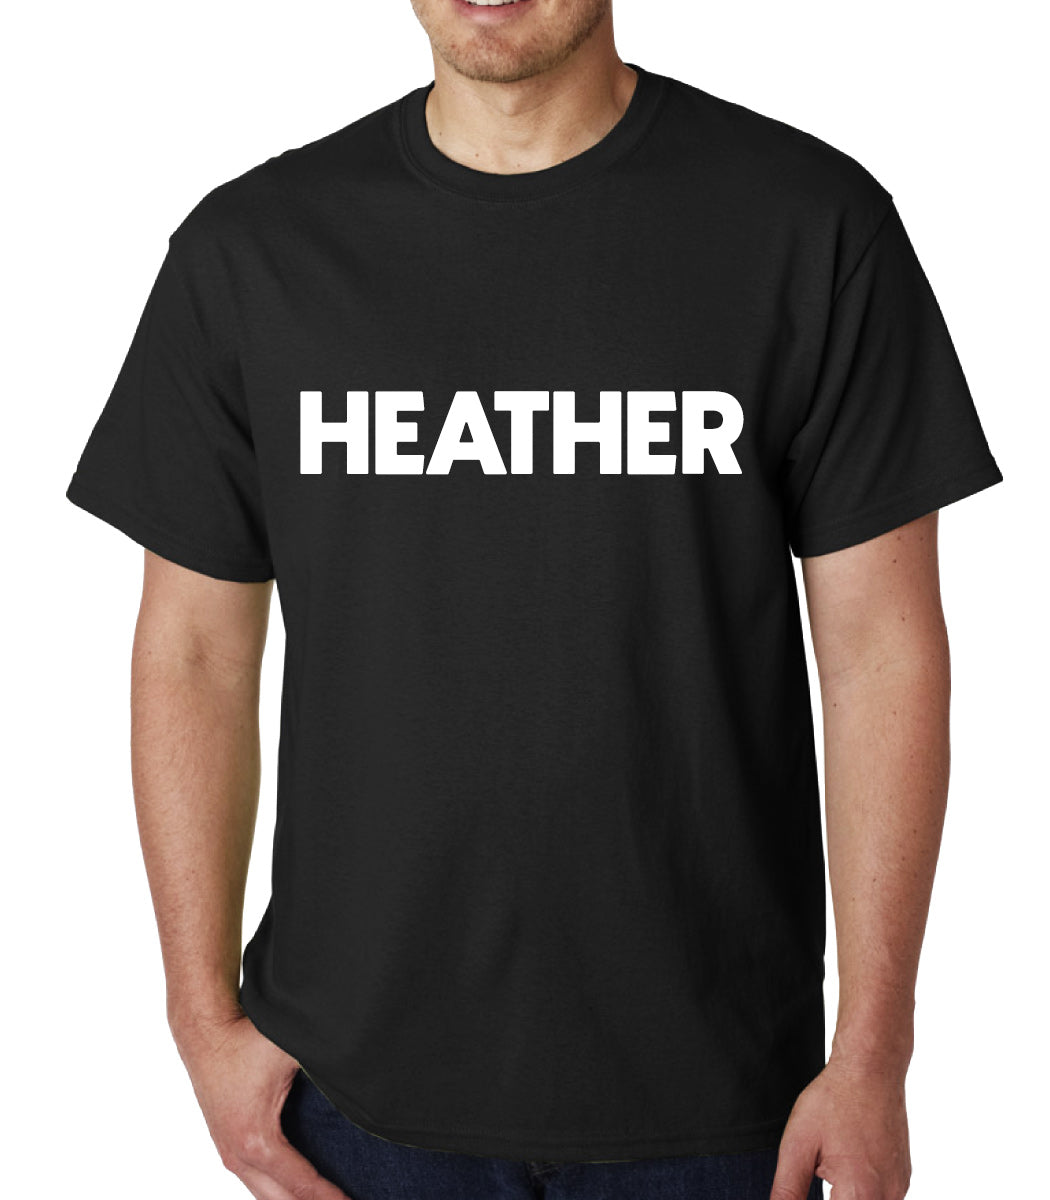 Heather t-shirt